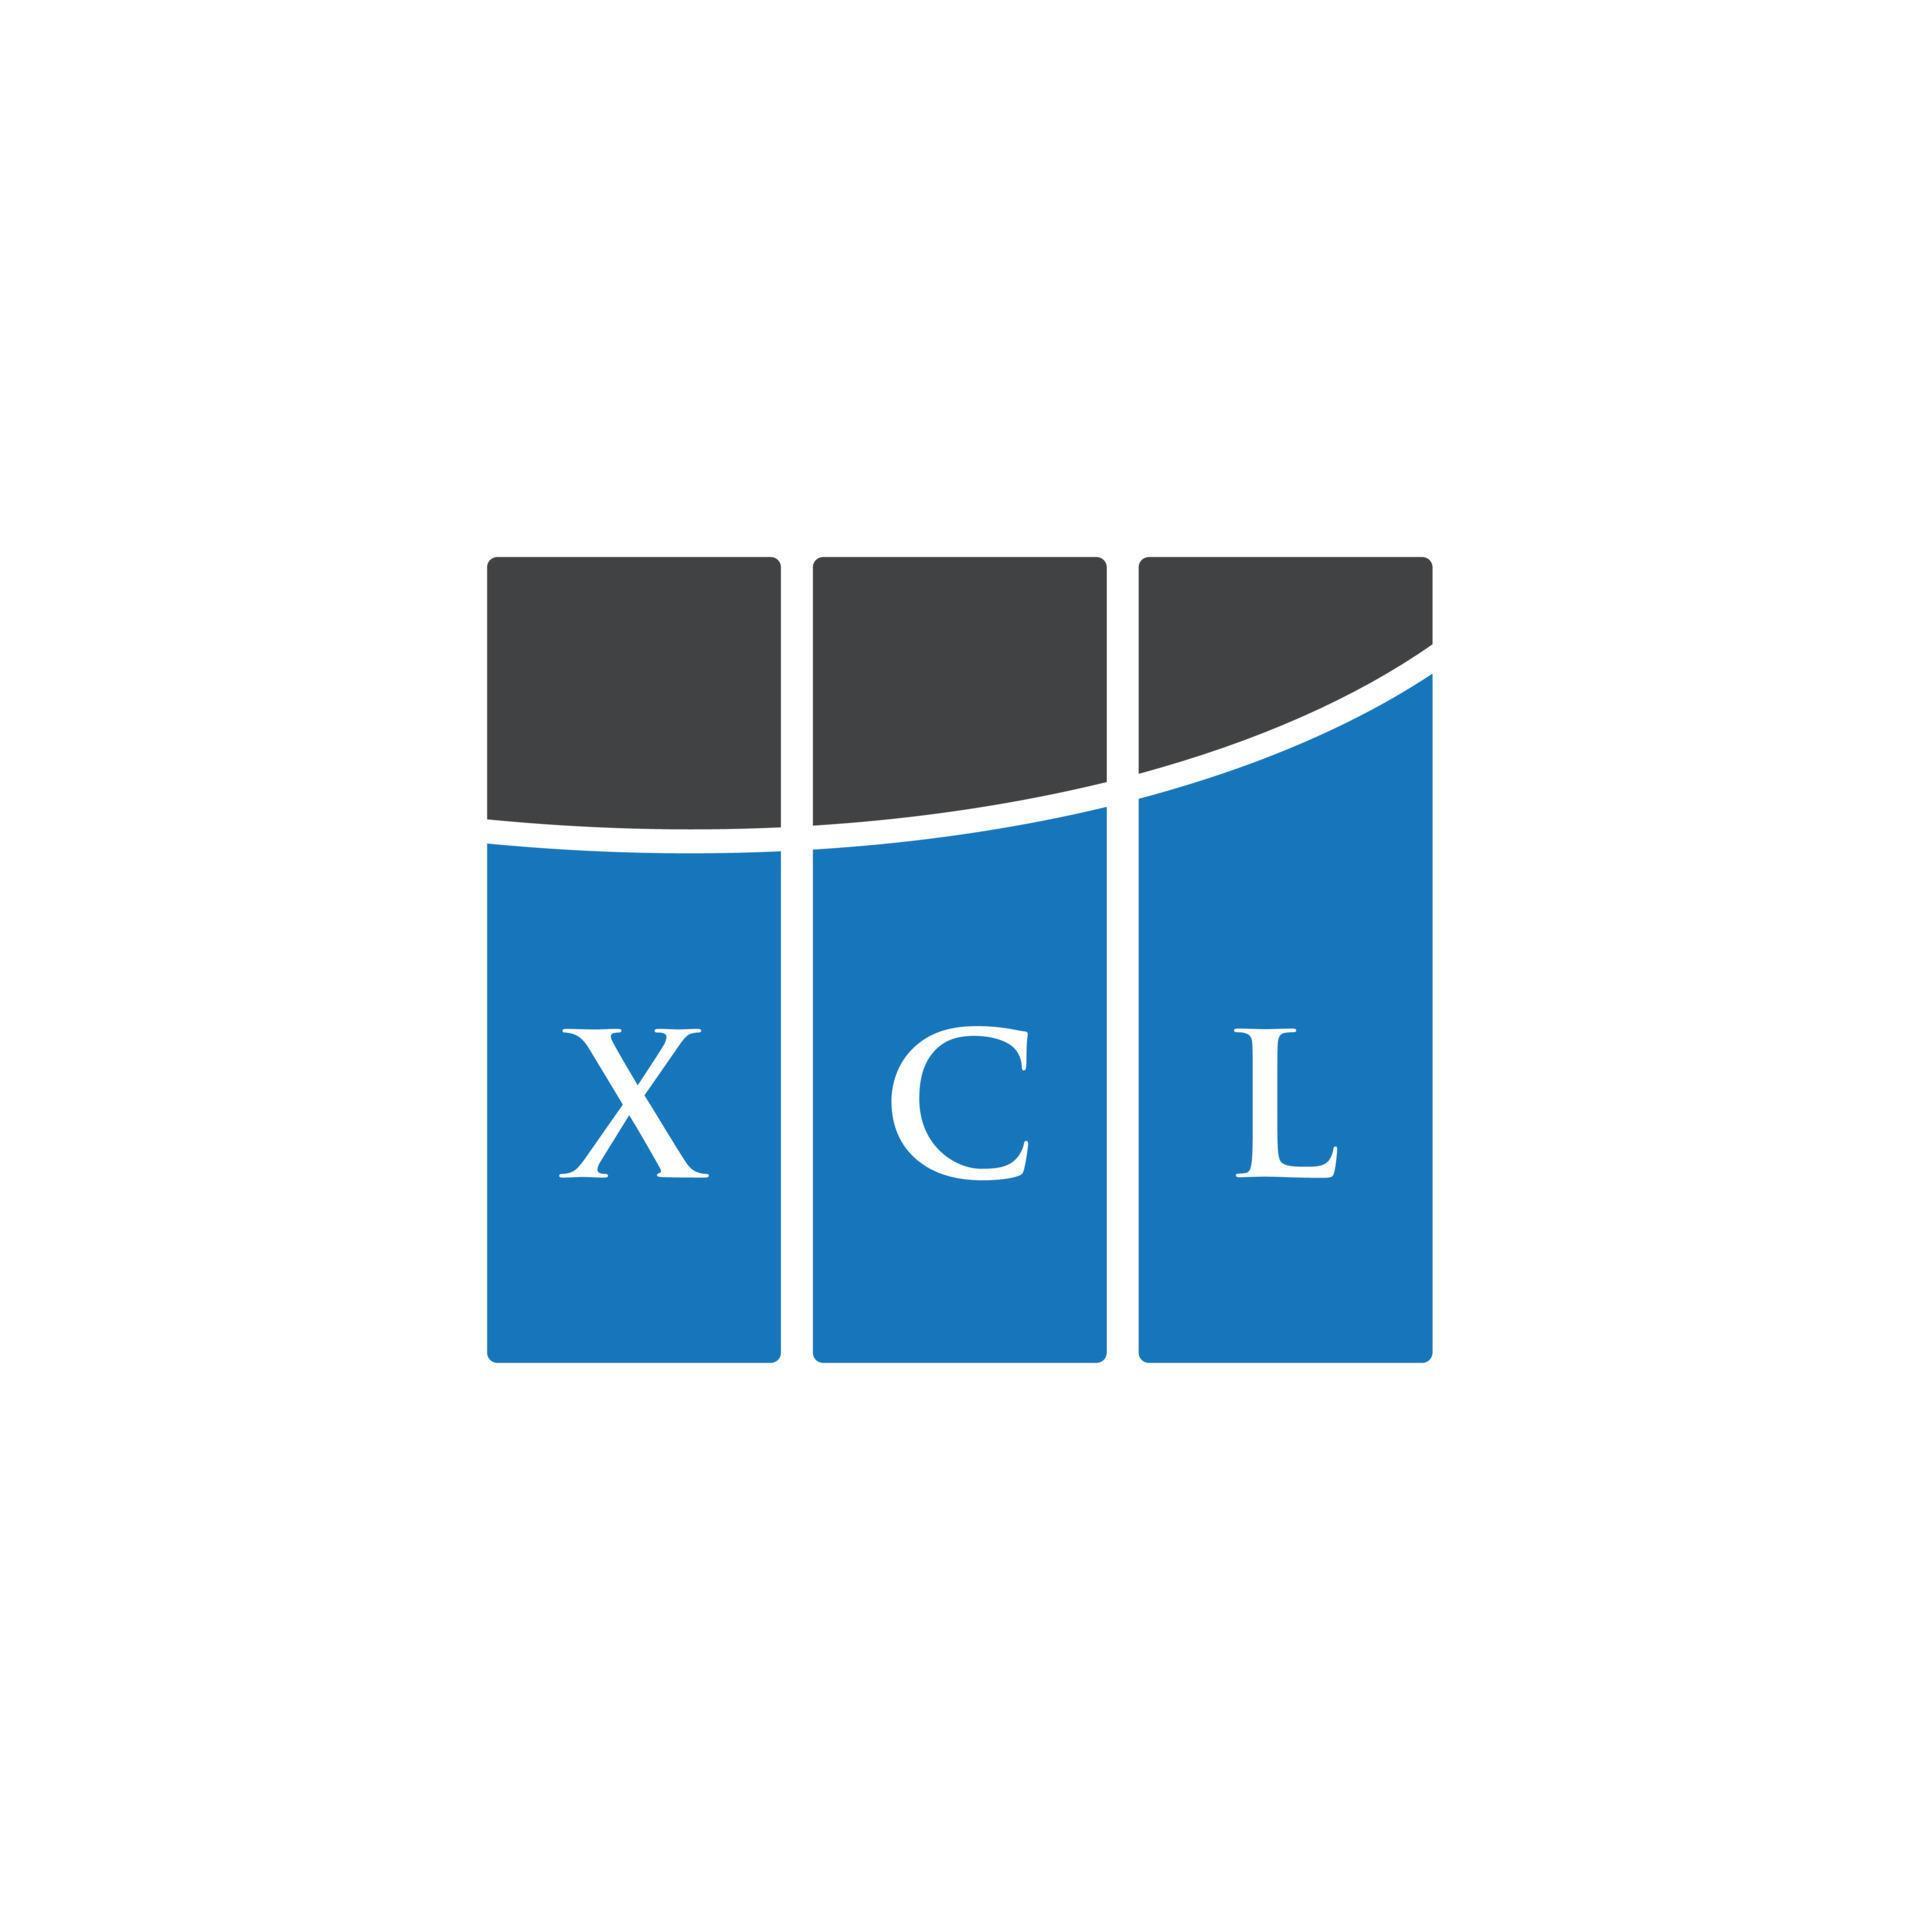 diseño de logotipo de letra xcl sobre fondo blanco. concepto de logotipo de letra de iniciales creativas xcl. diseño de letras xcl. vector